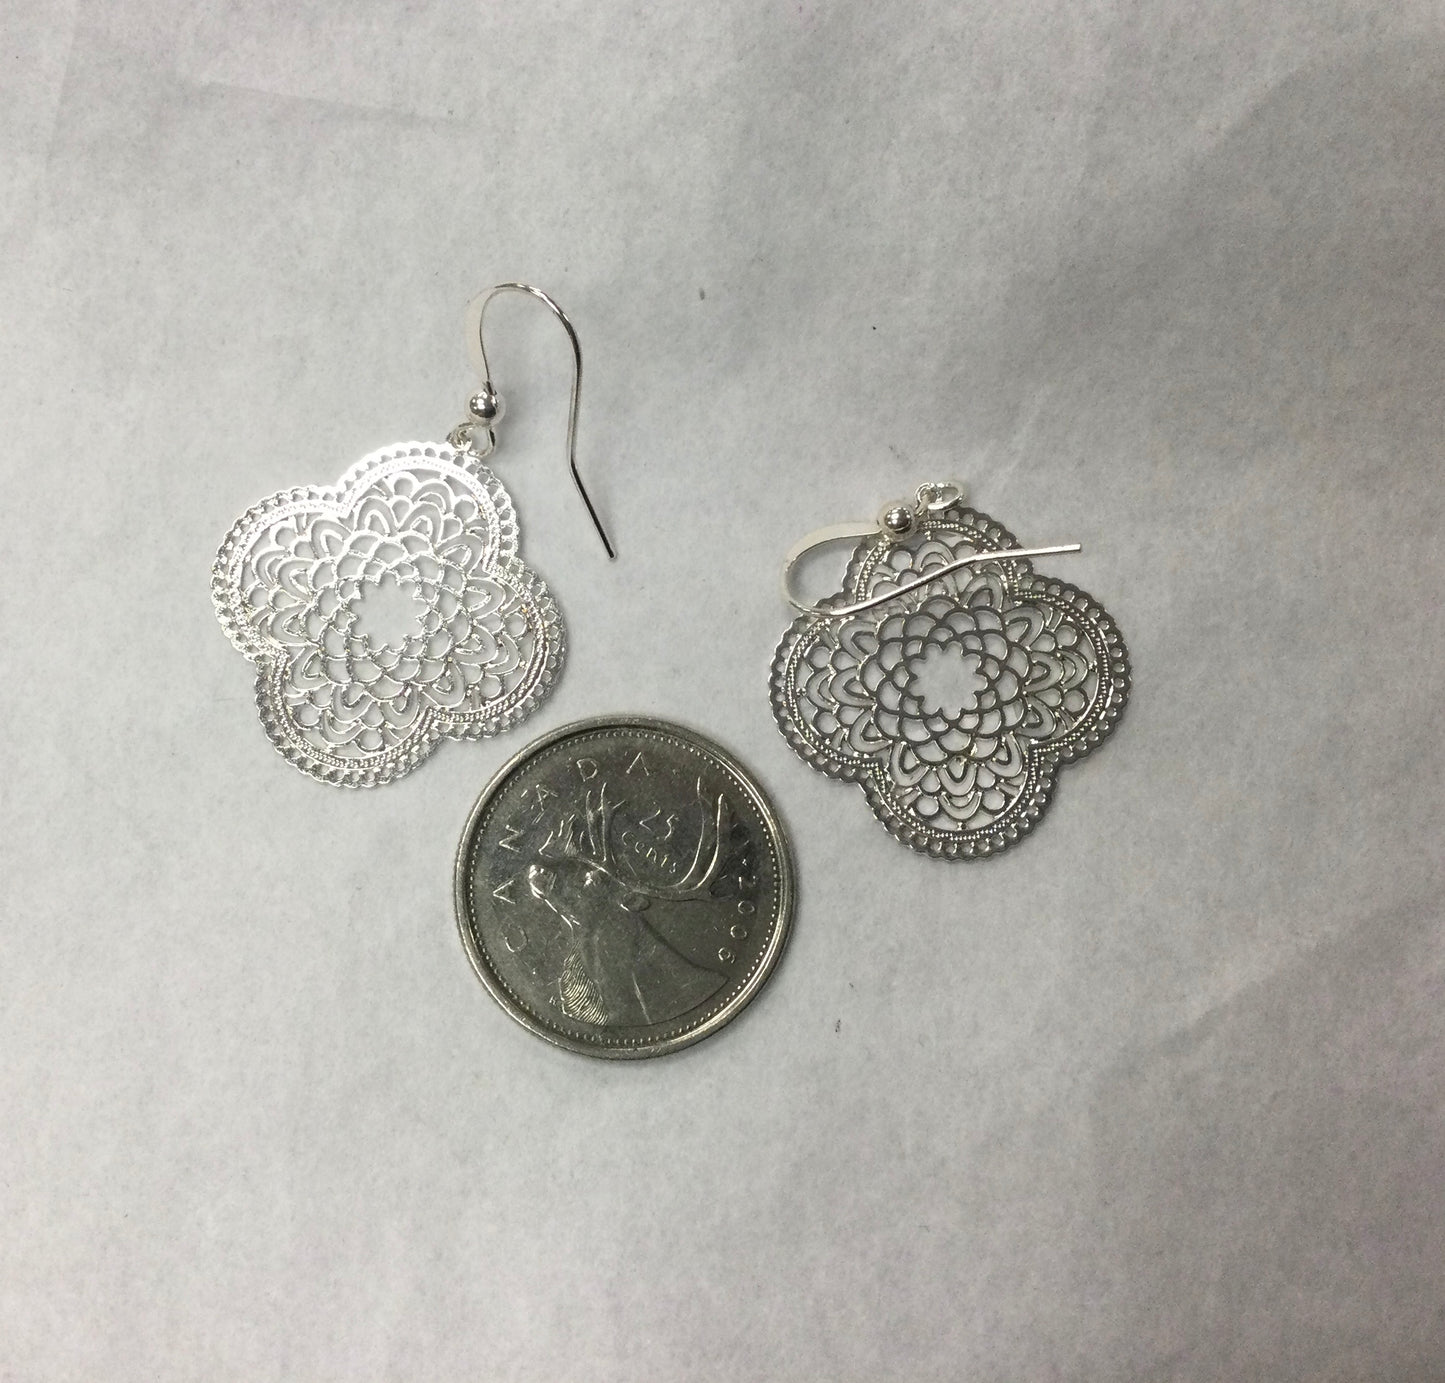 Lavishy earrings, four leaf clover with open flower center